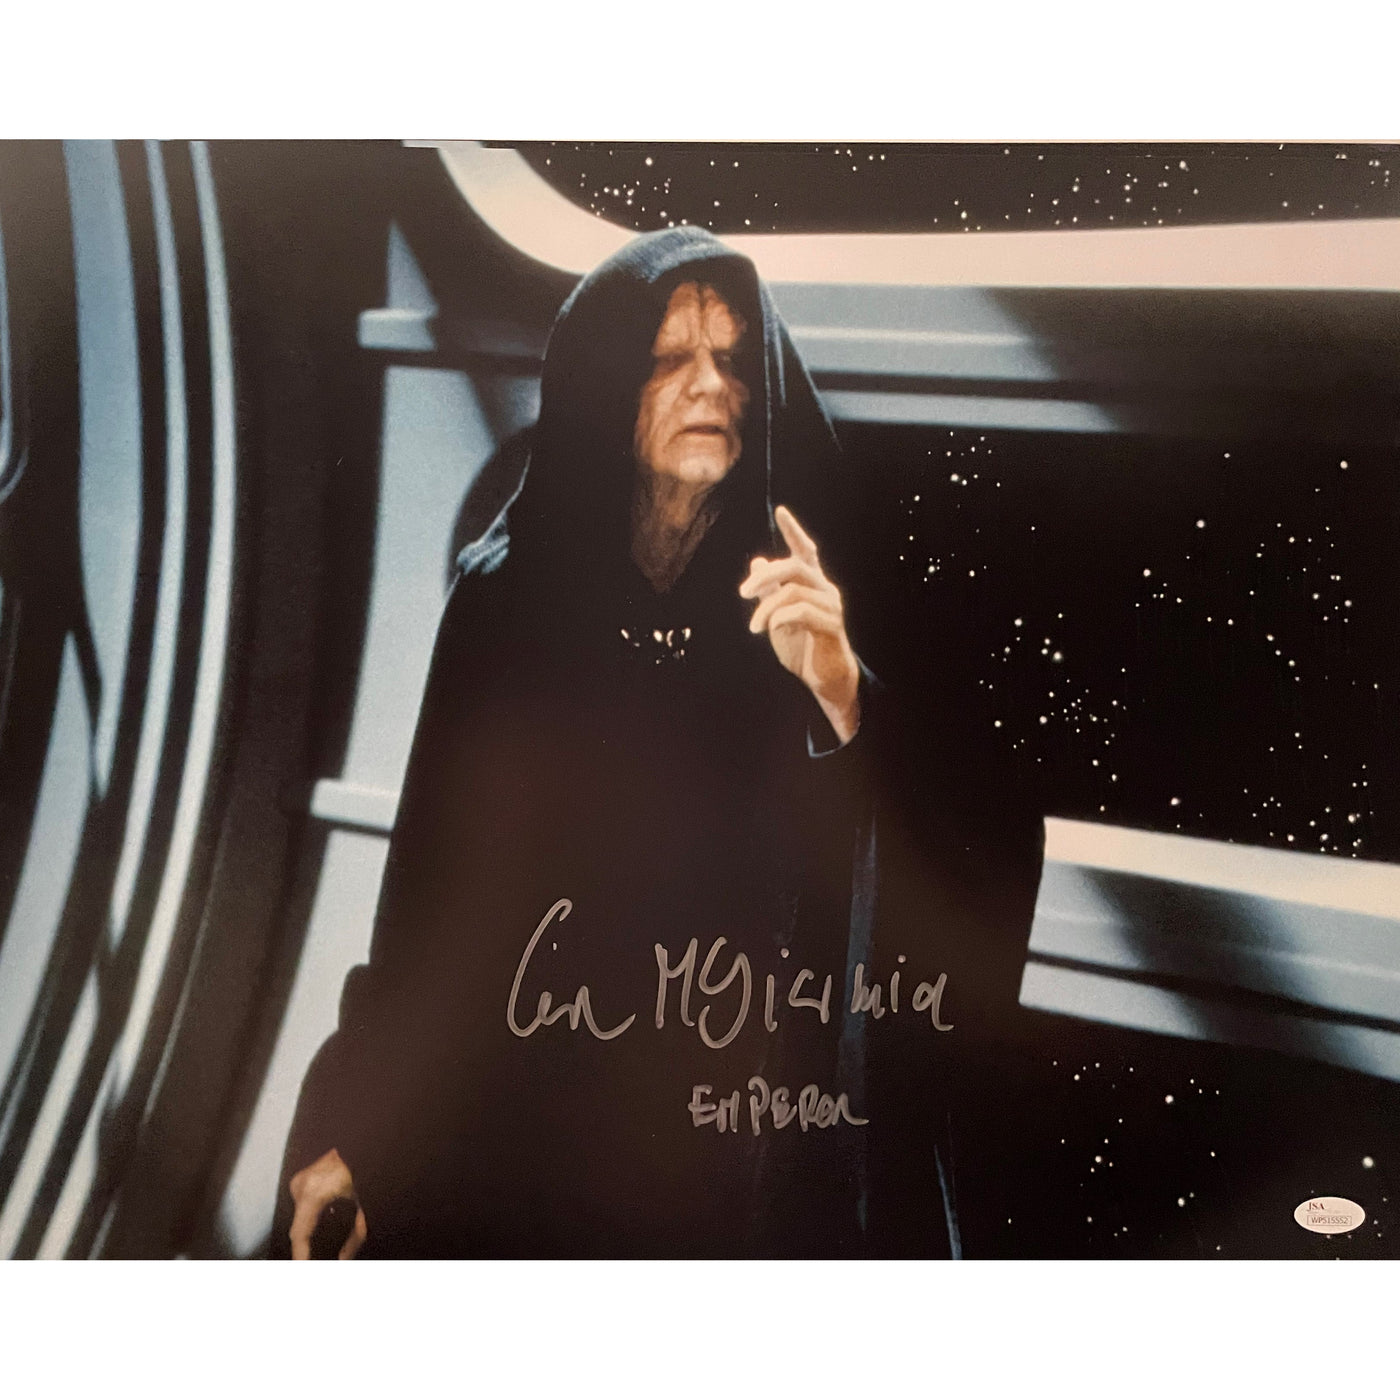 Ian Mcdiarmid Signed 16x20 Photo Star Wars Emperor Autographed JSA COA 7